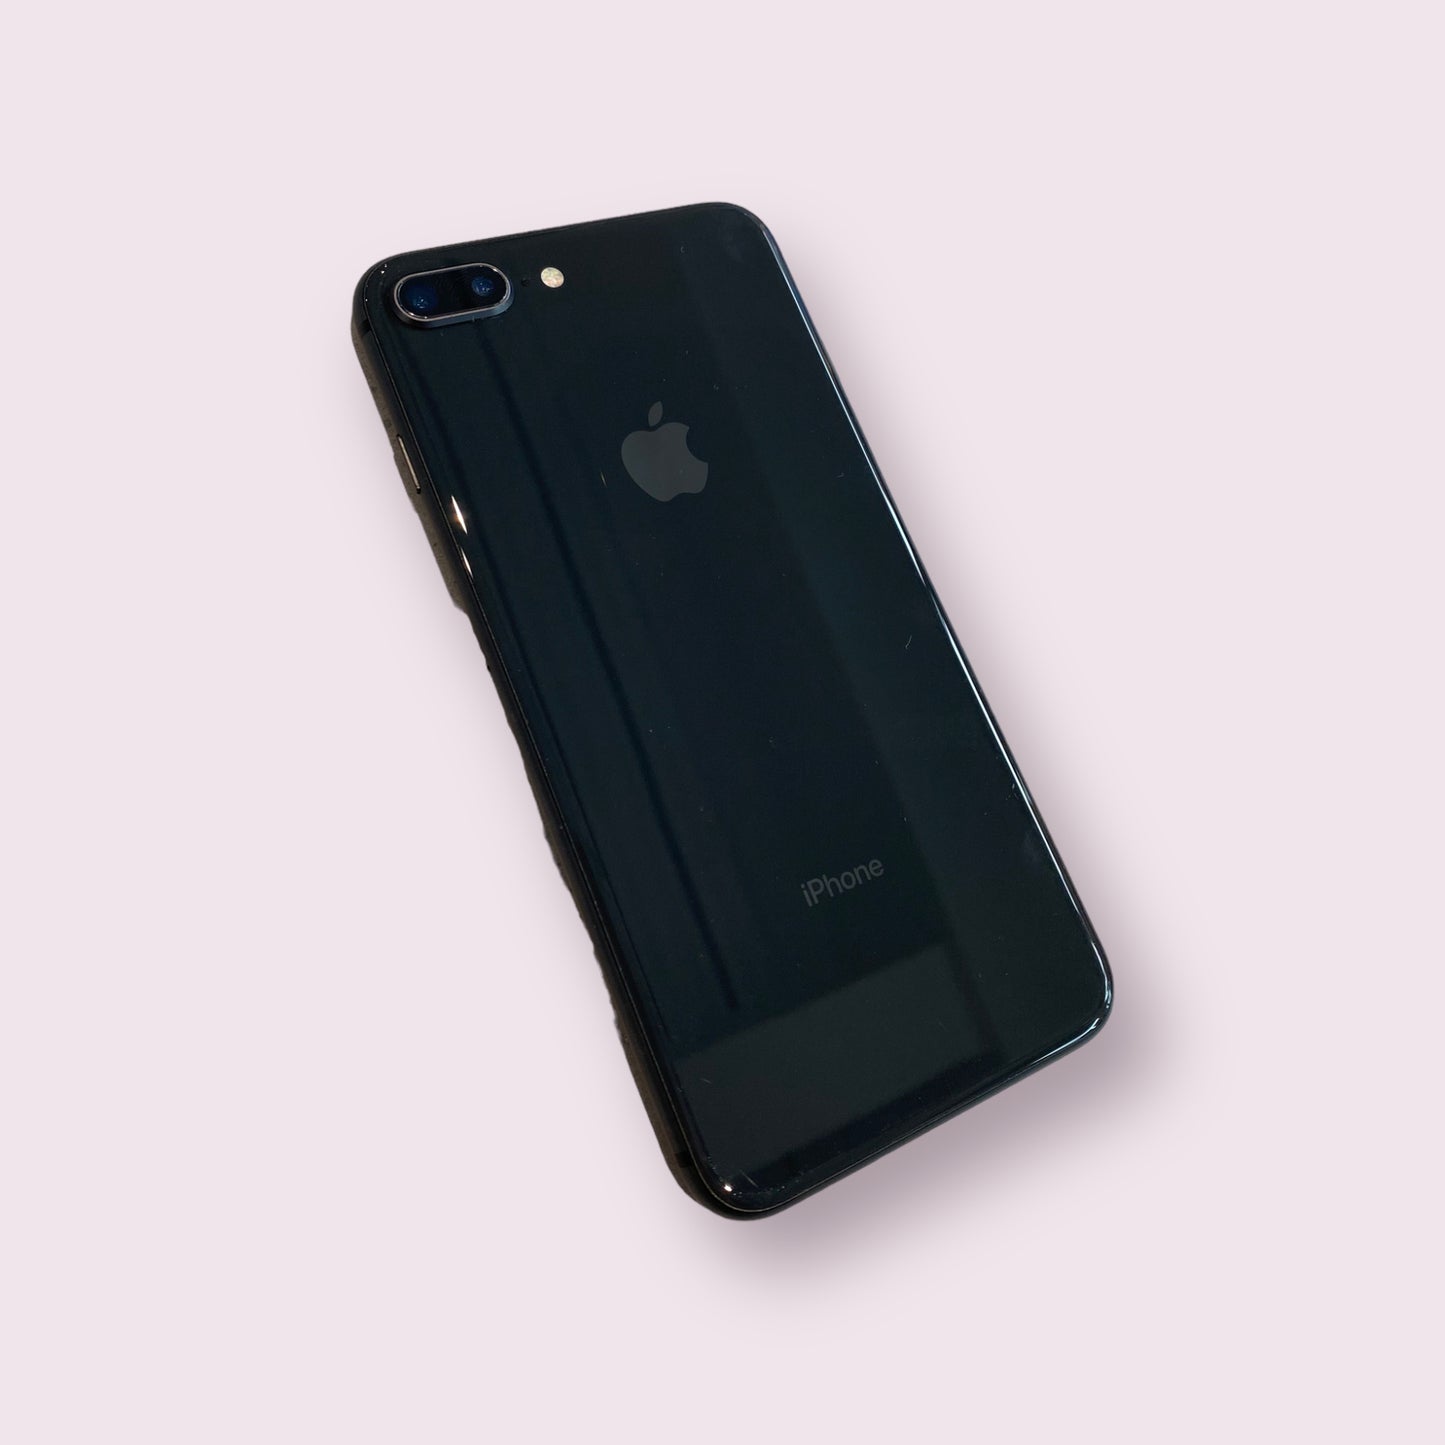 Apple iPhone 8 Plus 256GB Black Battery health 100%- unlocked - Grade A